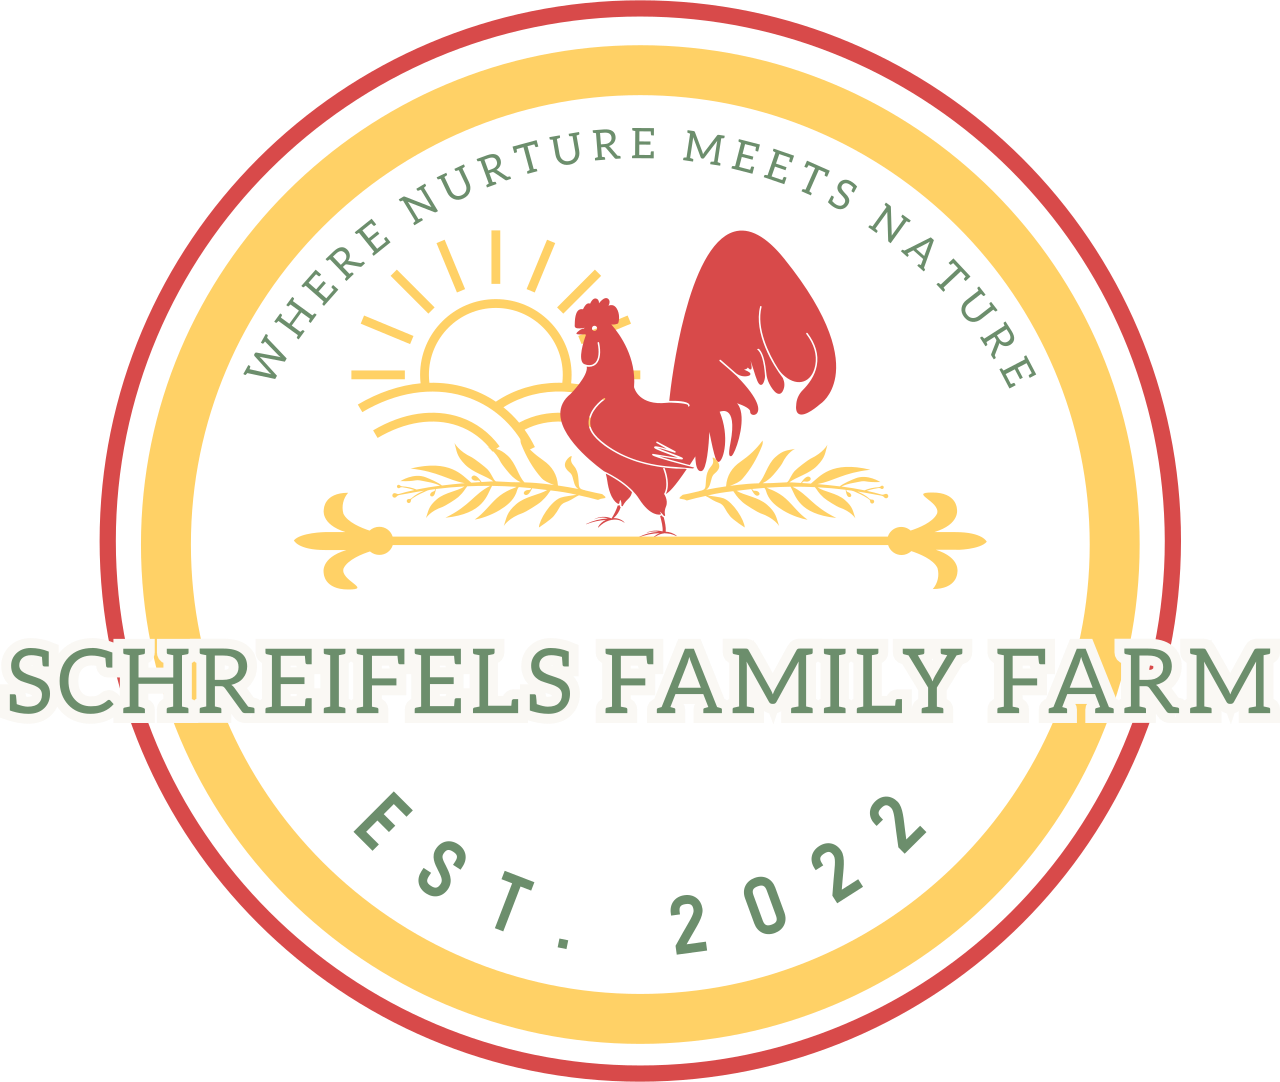 Schreifels Family Farm's logo